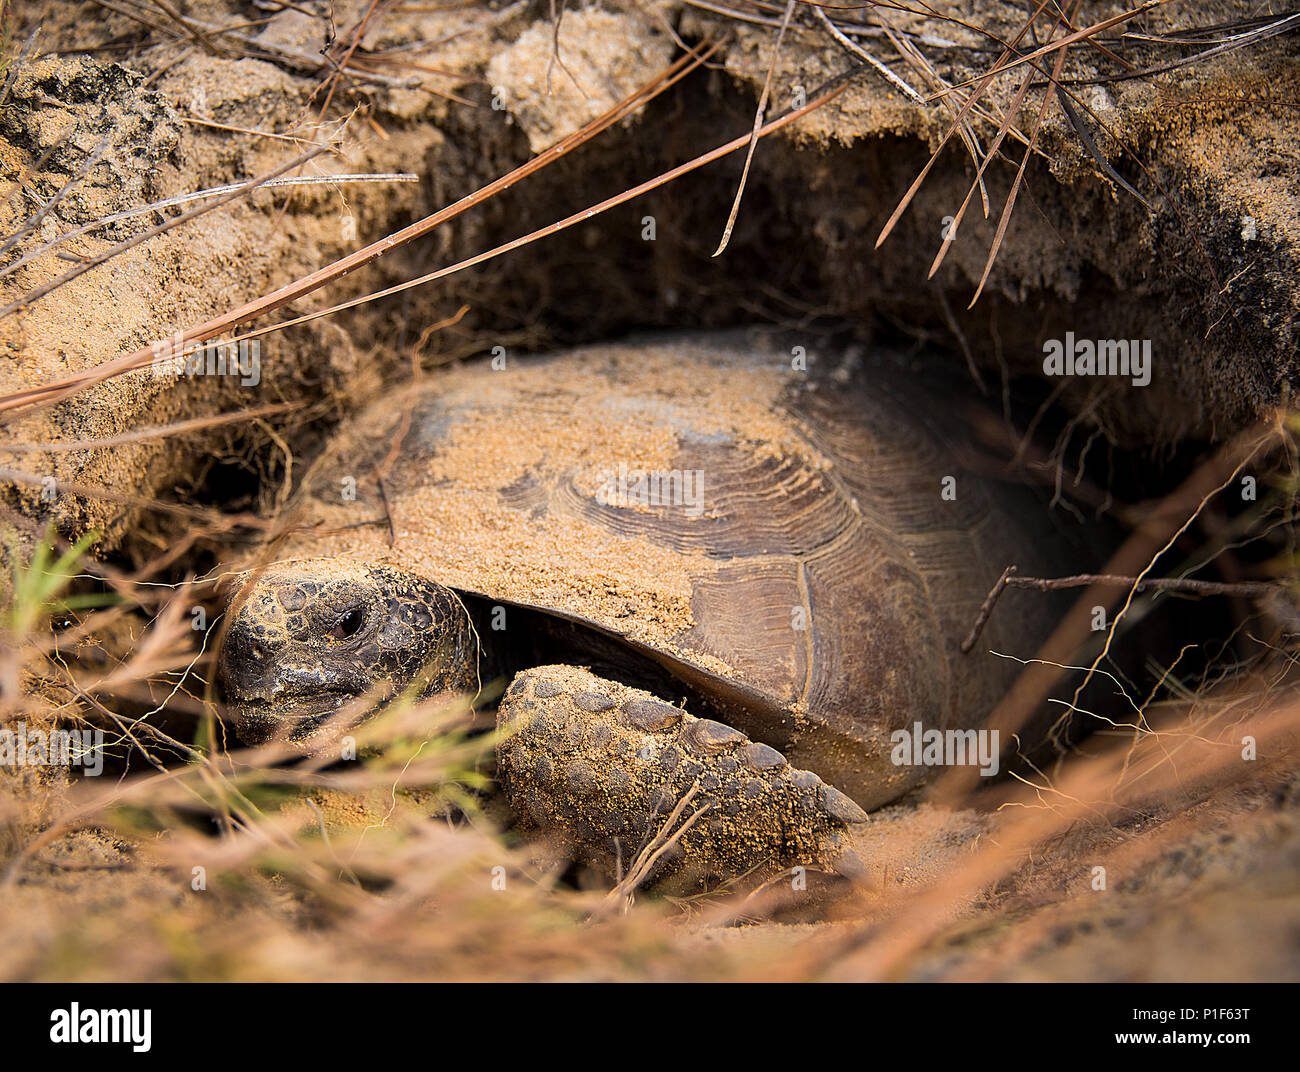 Спячка черепахи в домашних условиях. Среднеазиатская черепаха в спячке. Черепаха в норе. Спячка животных.